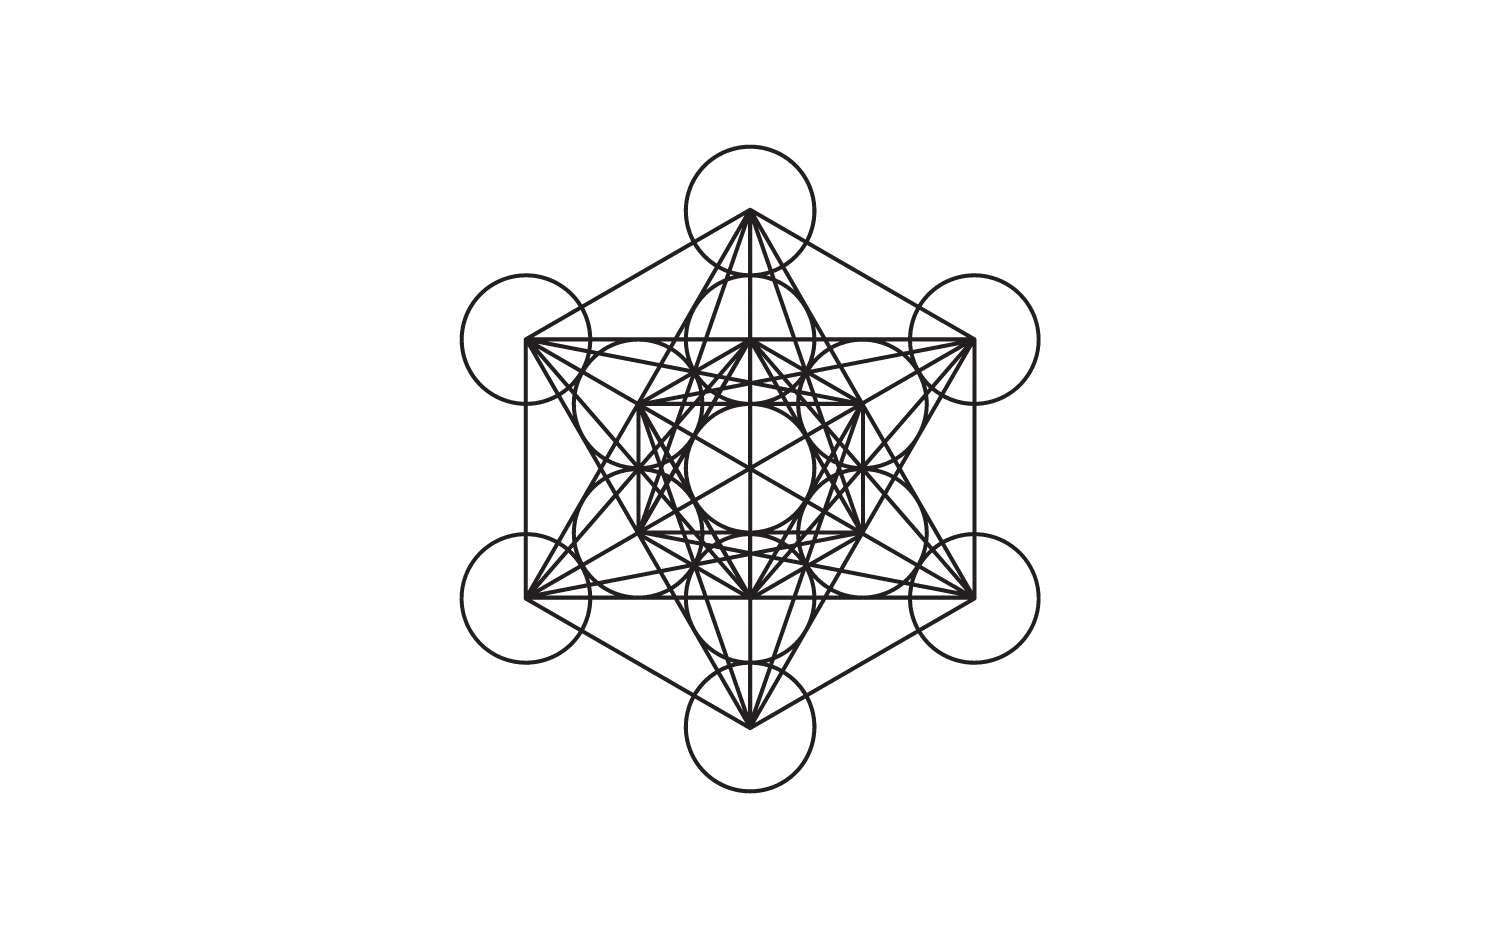 The Metatron’s Cube Symbol